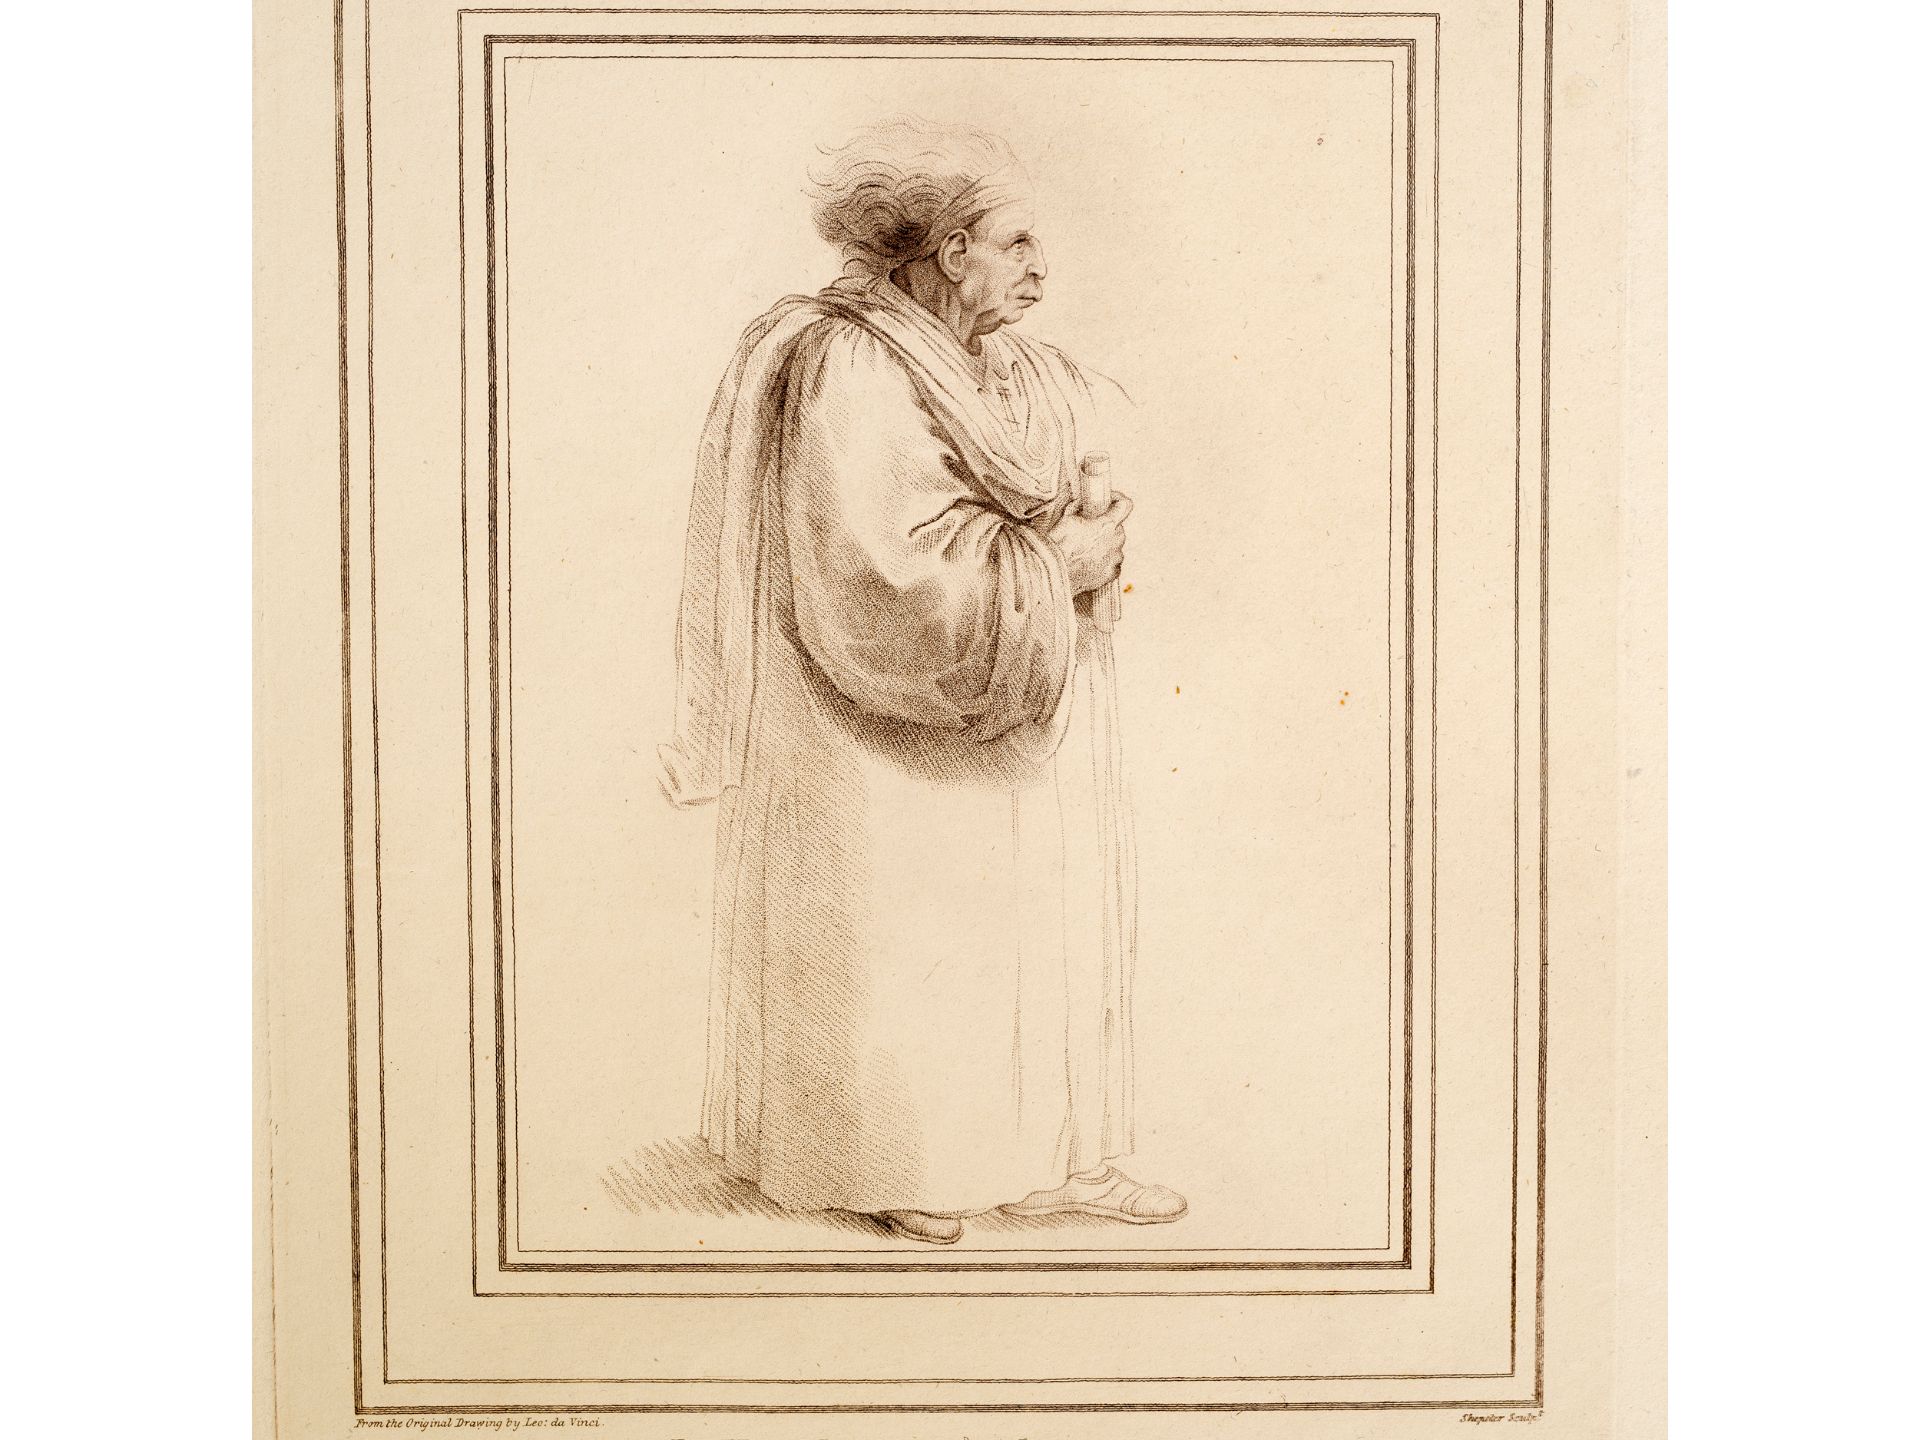 Robert Shepster, London, aktiv 1780 – 1810, Nach Leonardo da Vinci